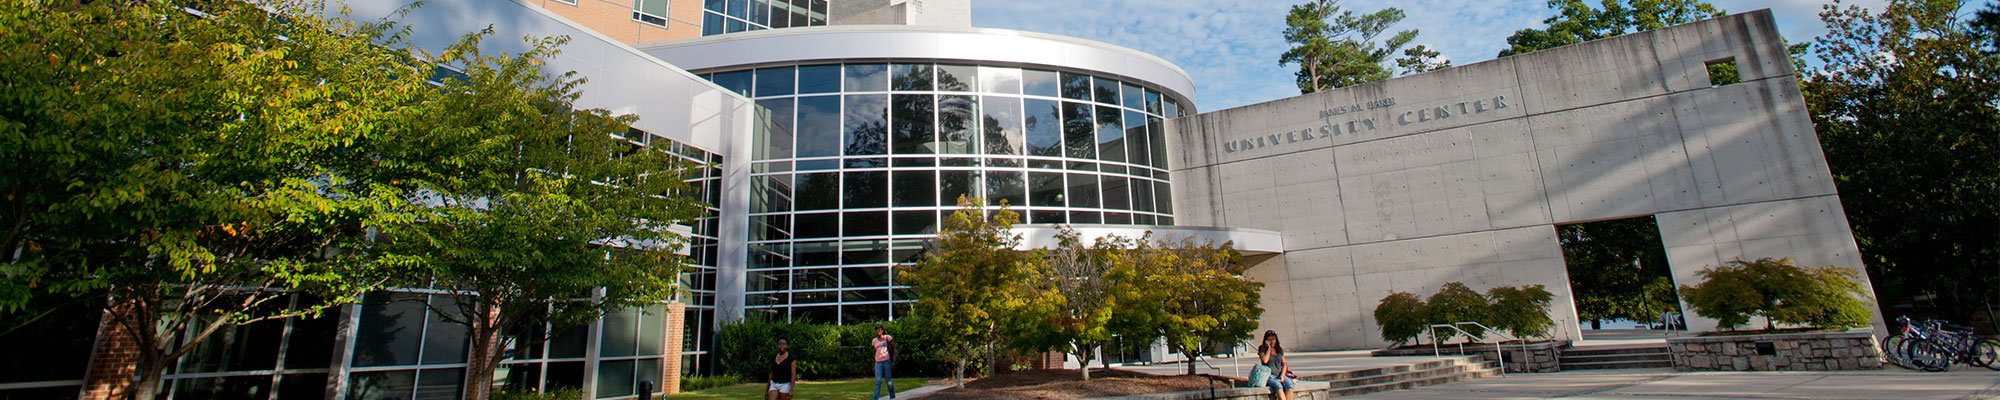 Clayton State University Center